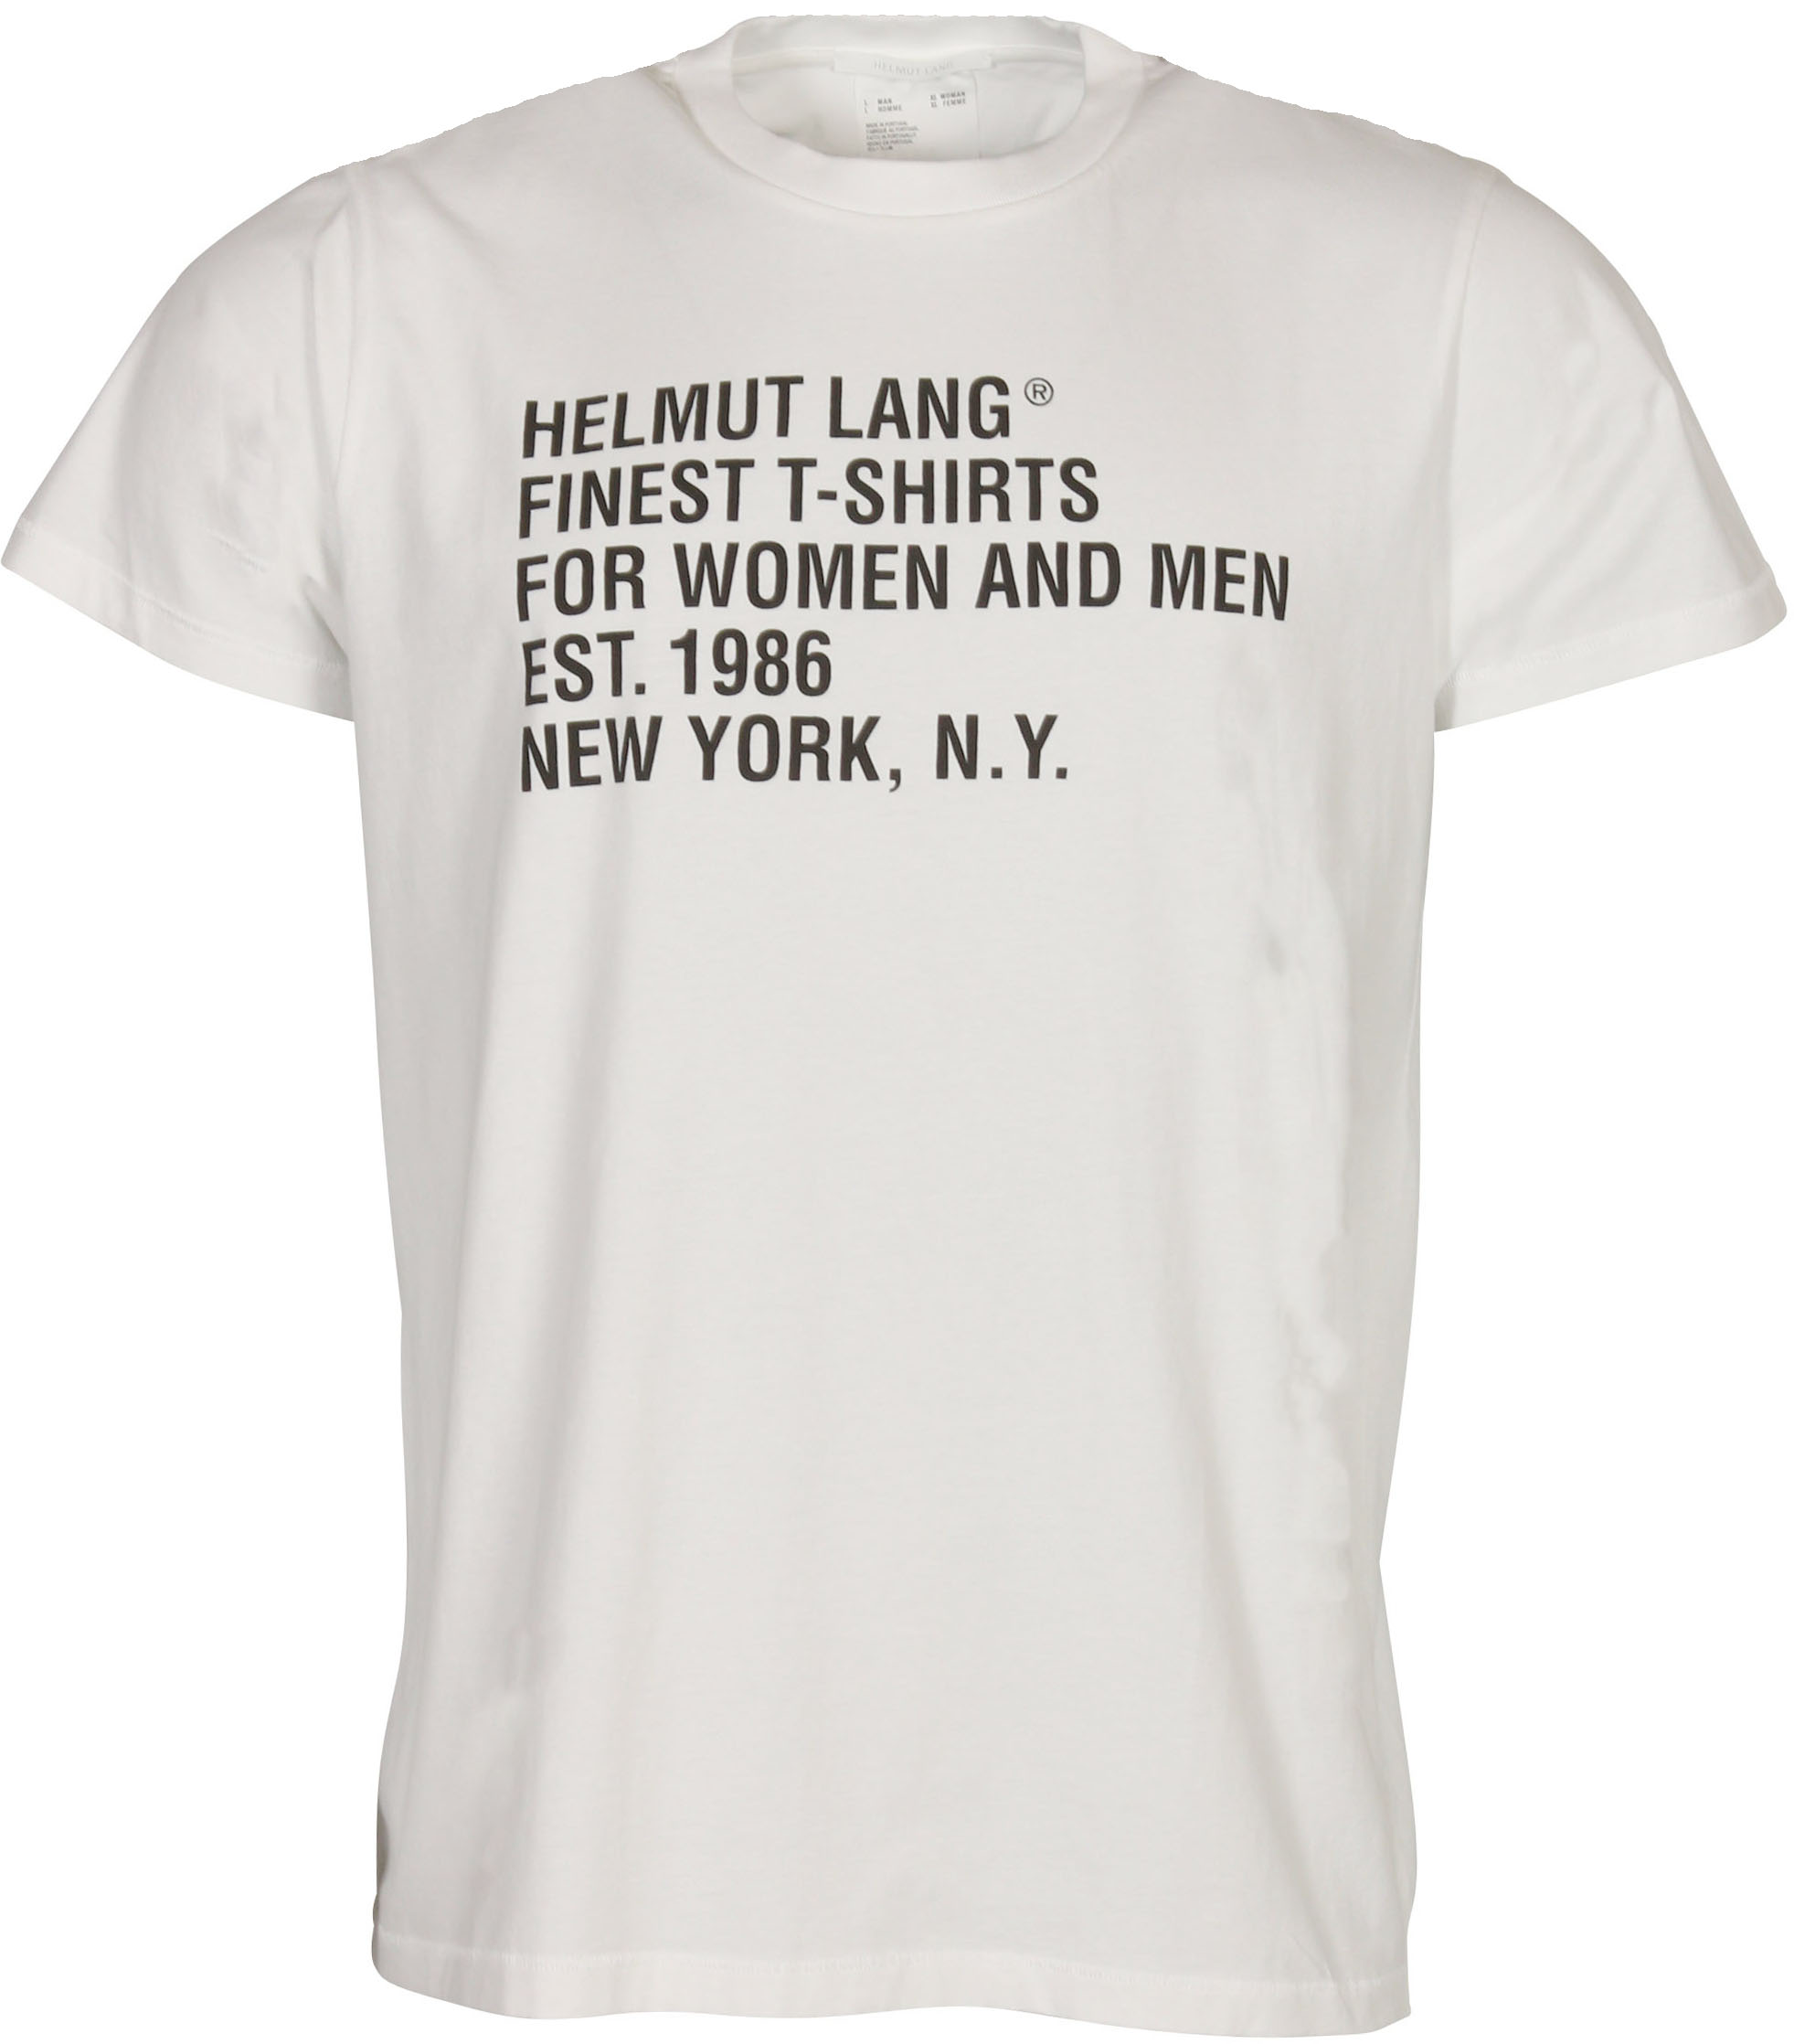 Helmut Lang T-Shirt White Printed S